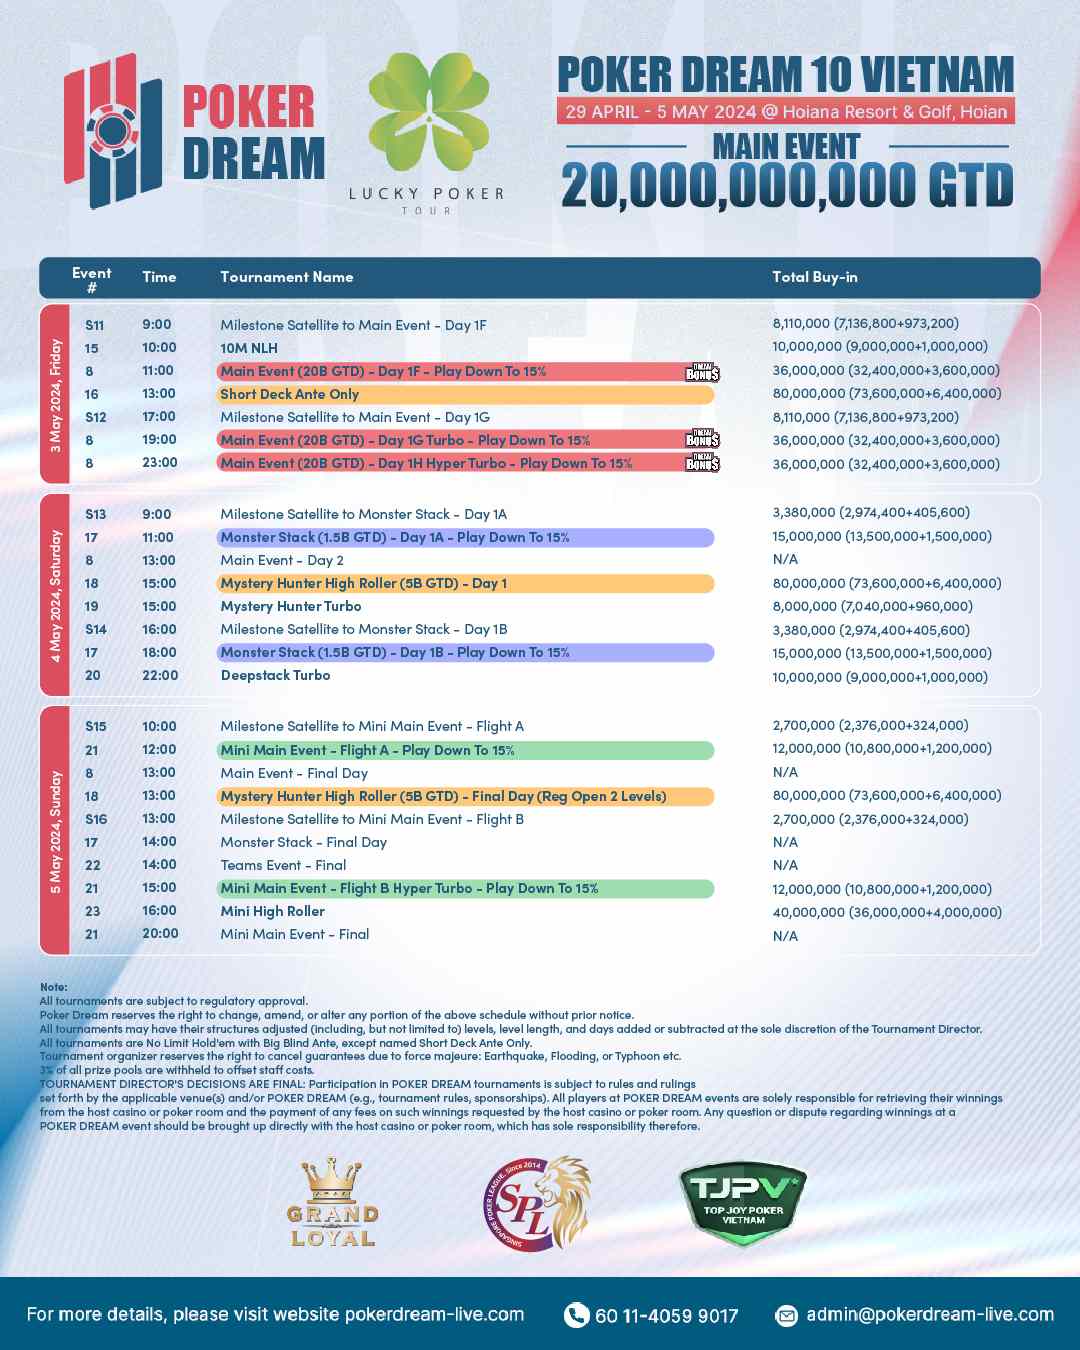 Poker Dream 10 Vietnam Schedule